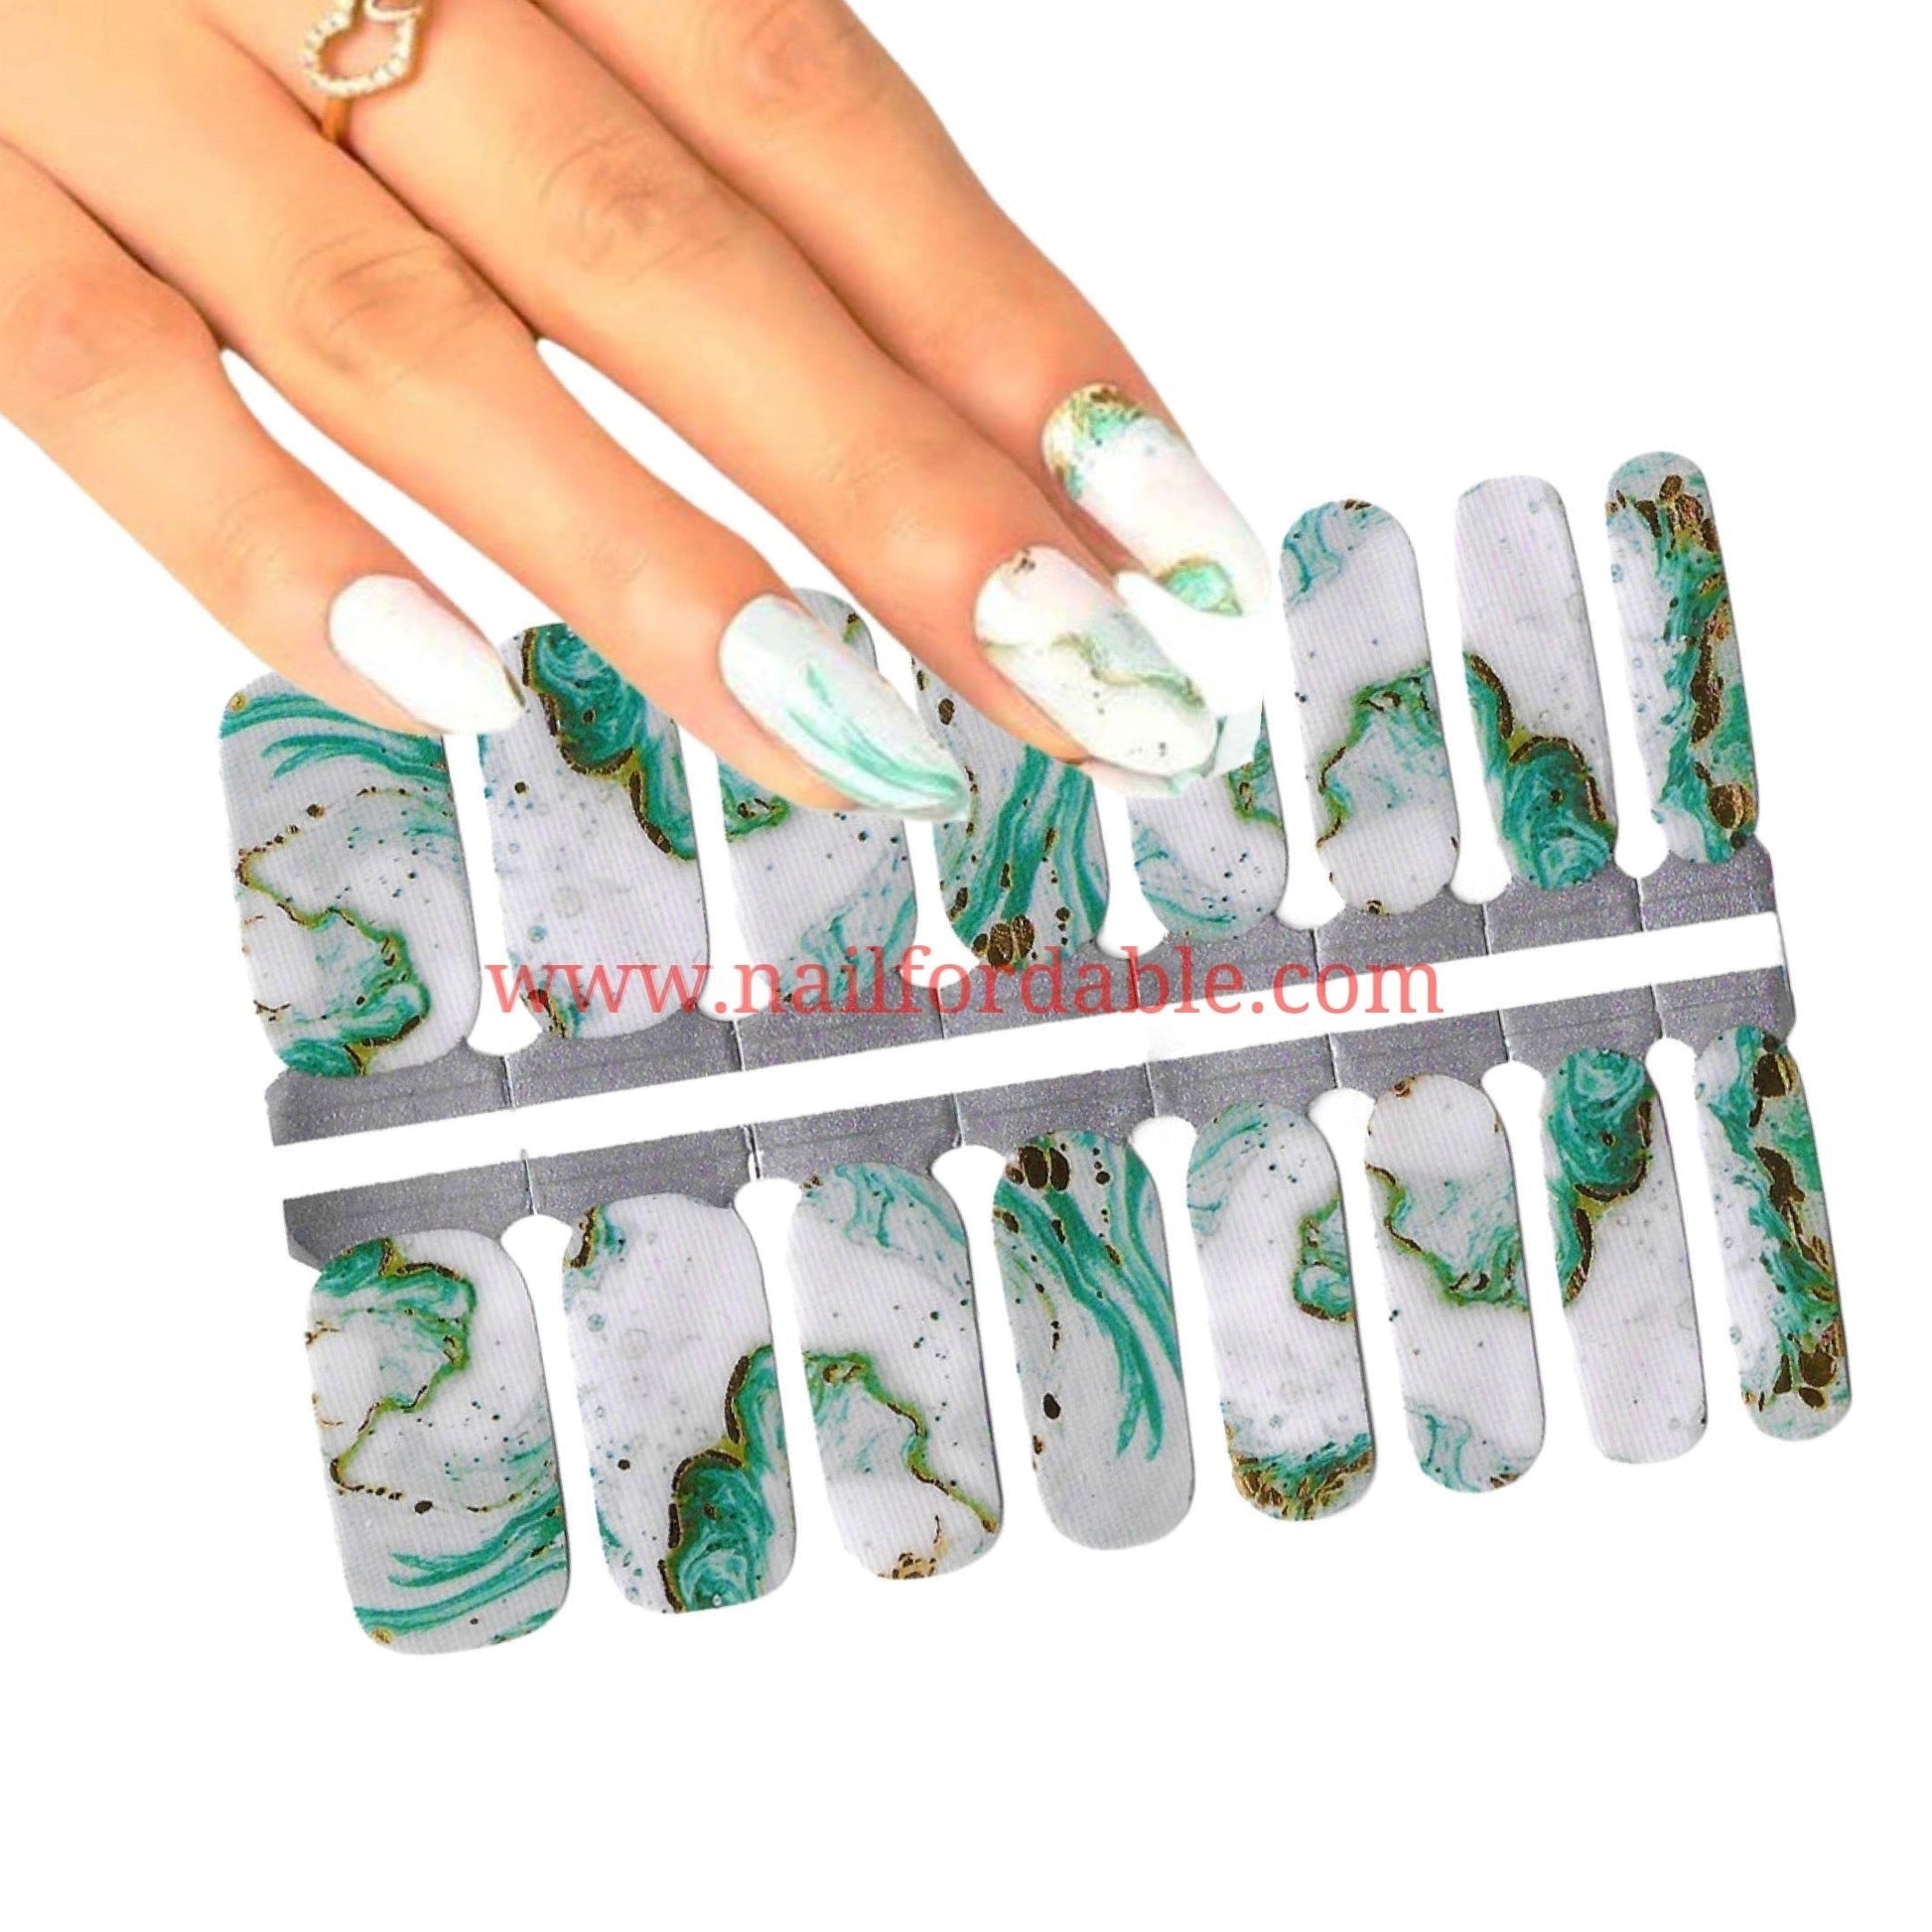 Precious stones Nail Wraps | Semi Cured Gel Wraps | Gel Nail Wraps |Nail Polish | Nail Stickers